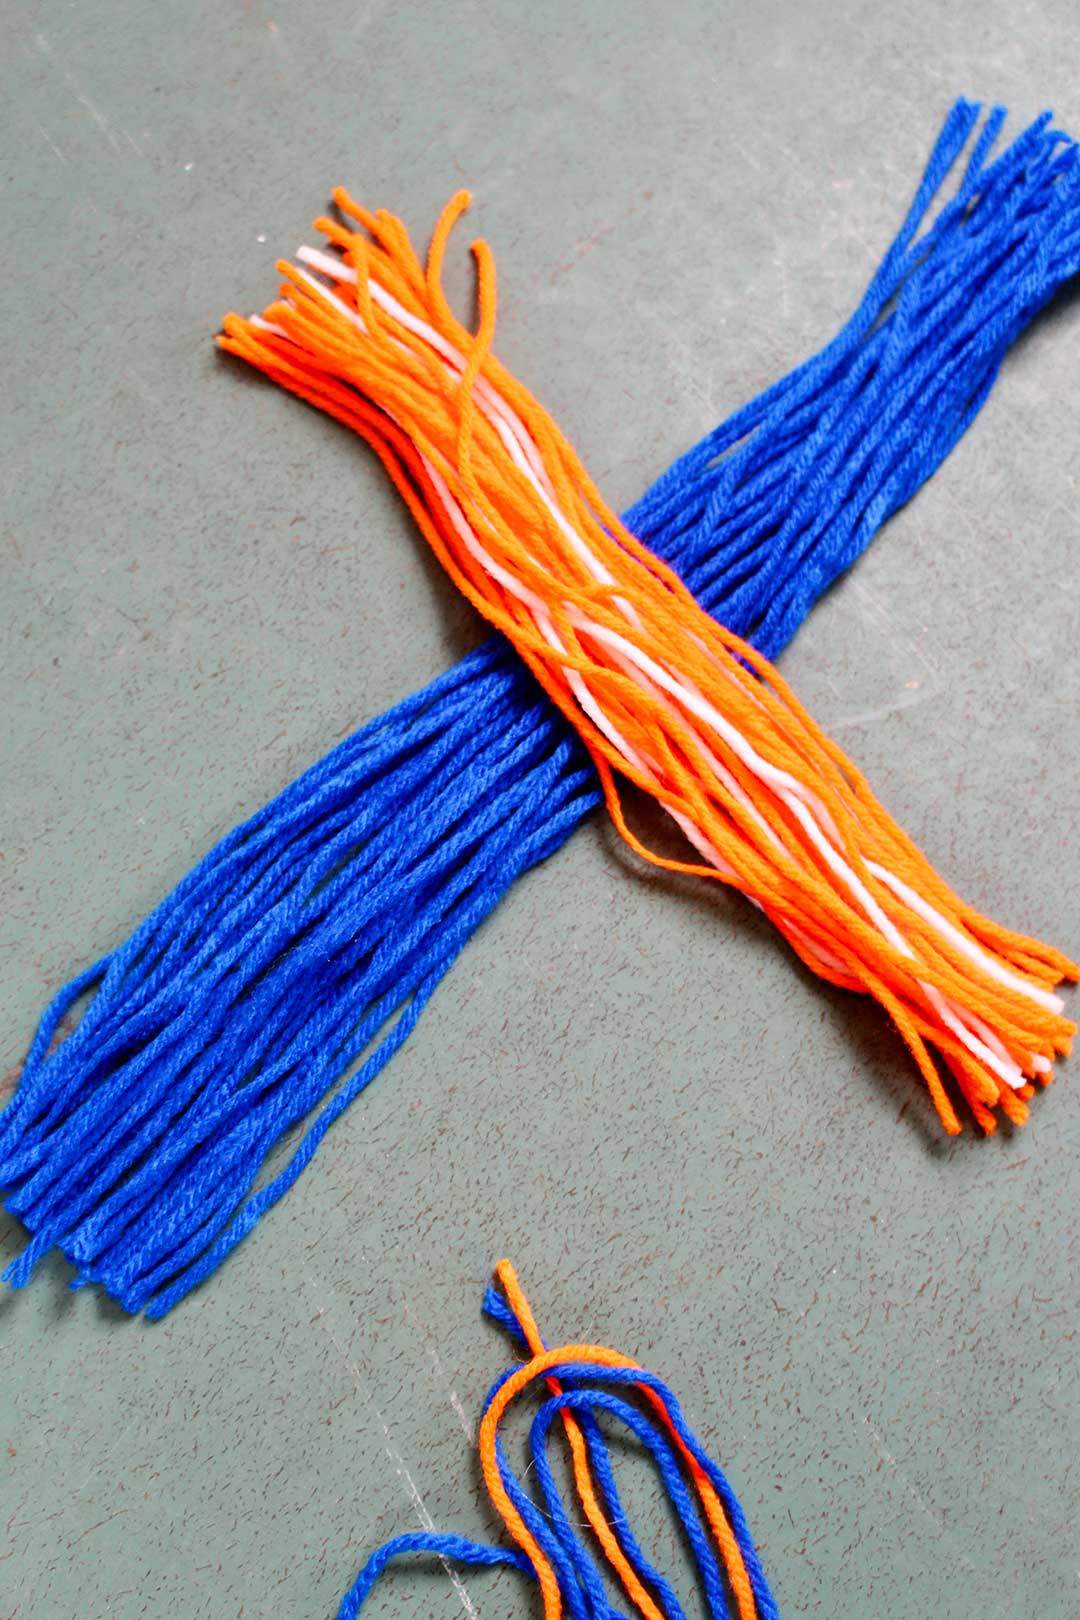 Strands of blue yarn in a bunch lying crosswise with strands of orange and white yarn in a bunch.